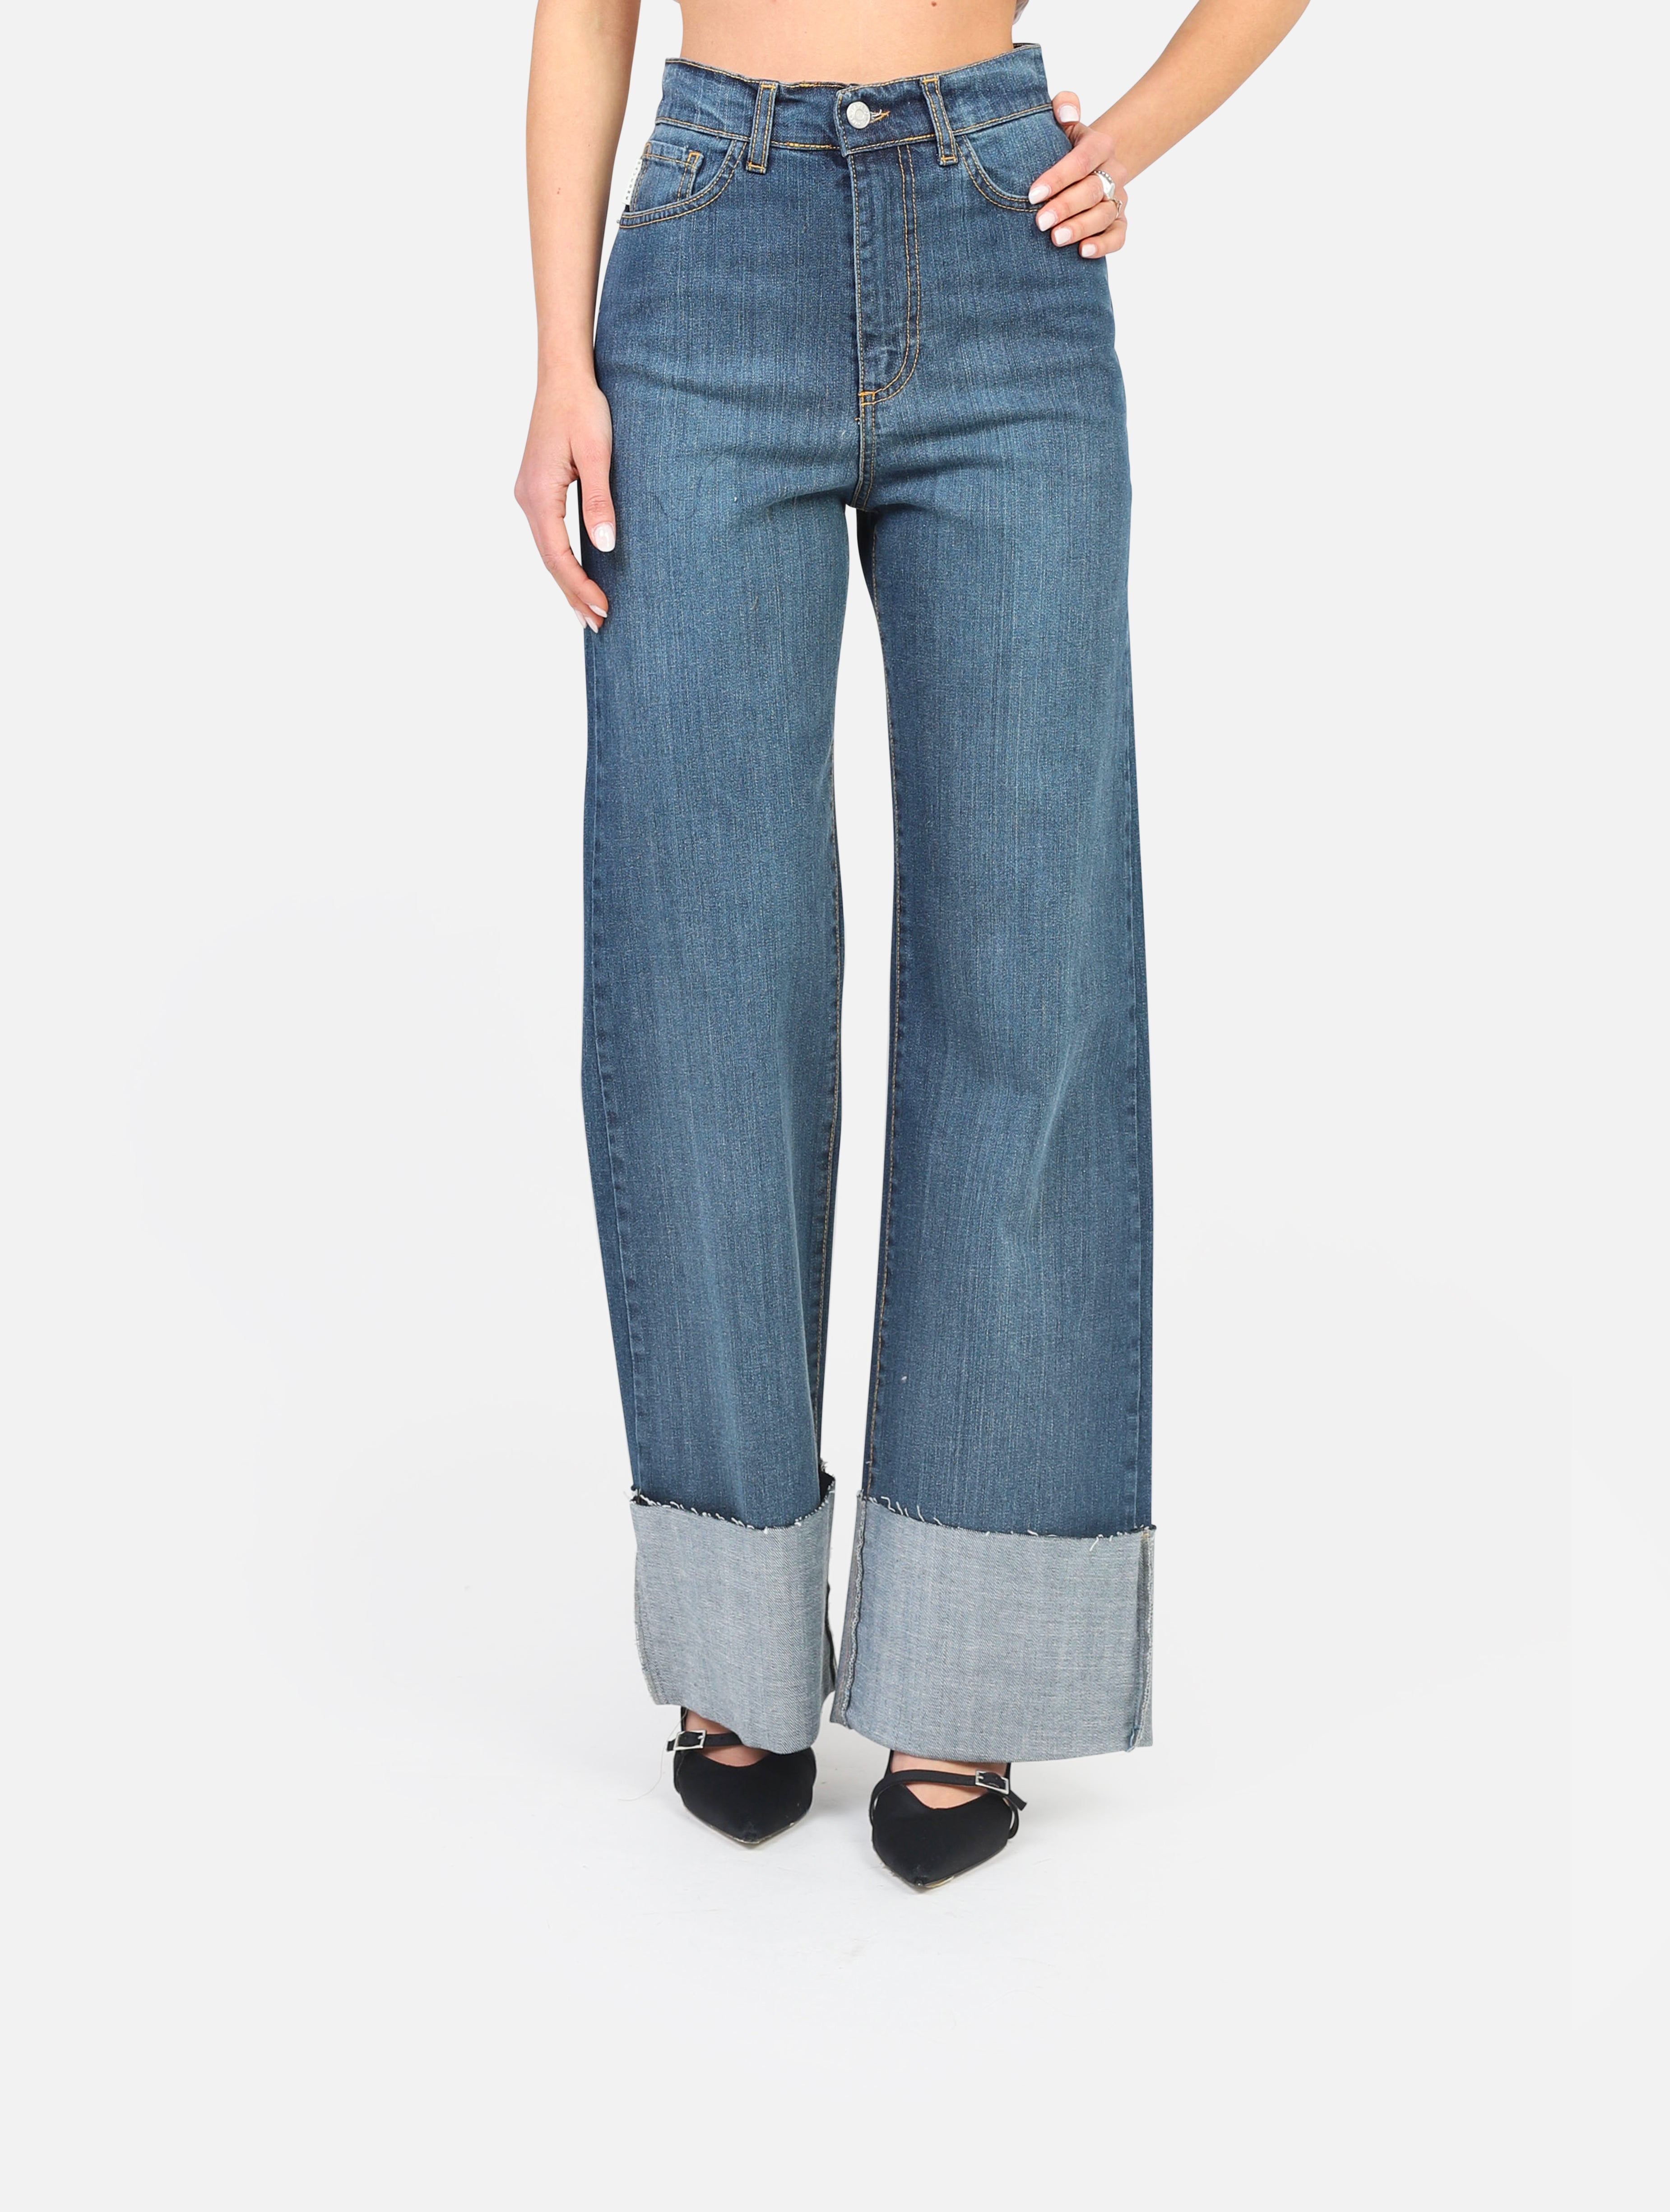 Jeans haveone -  denim woman  - 1